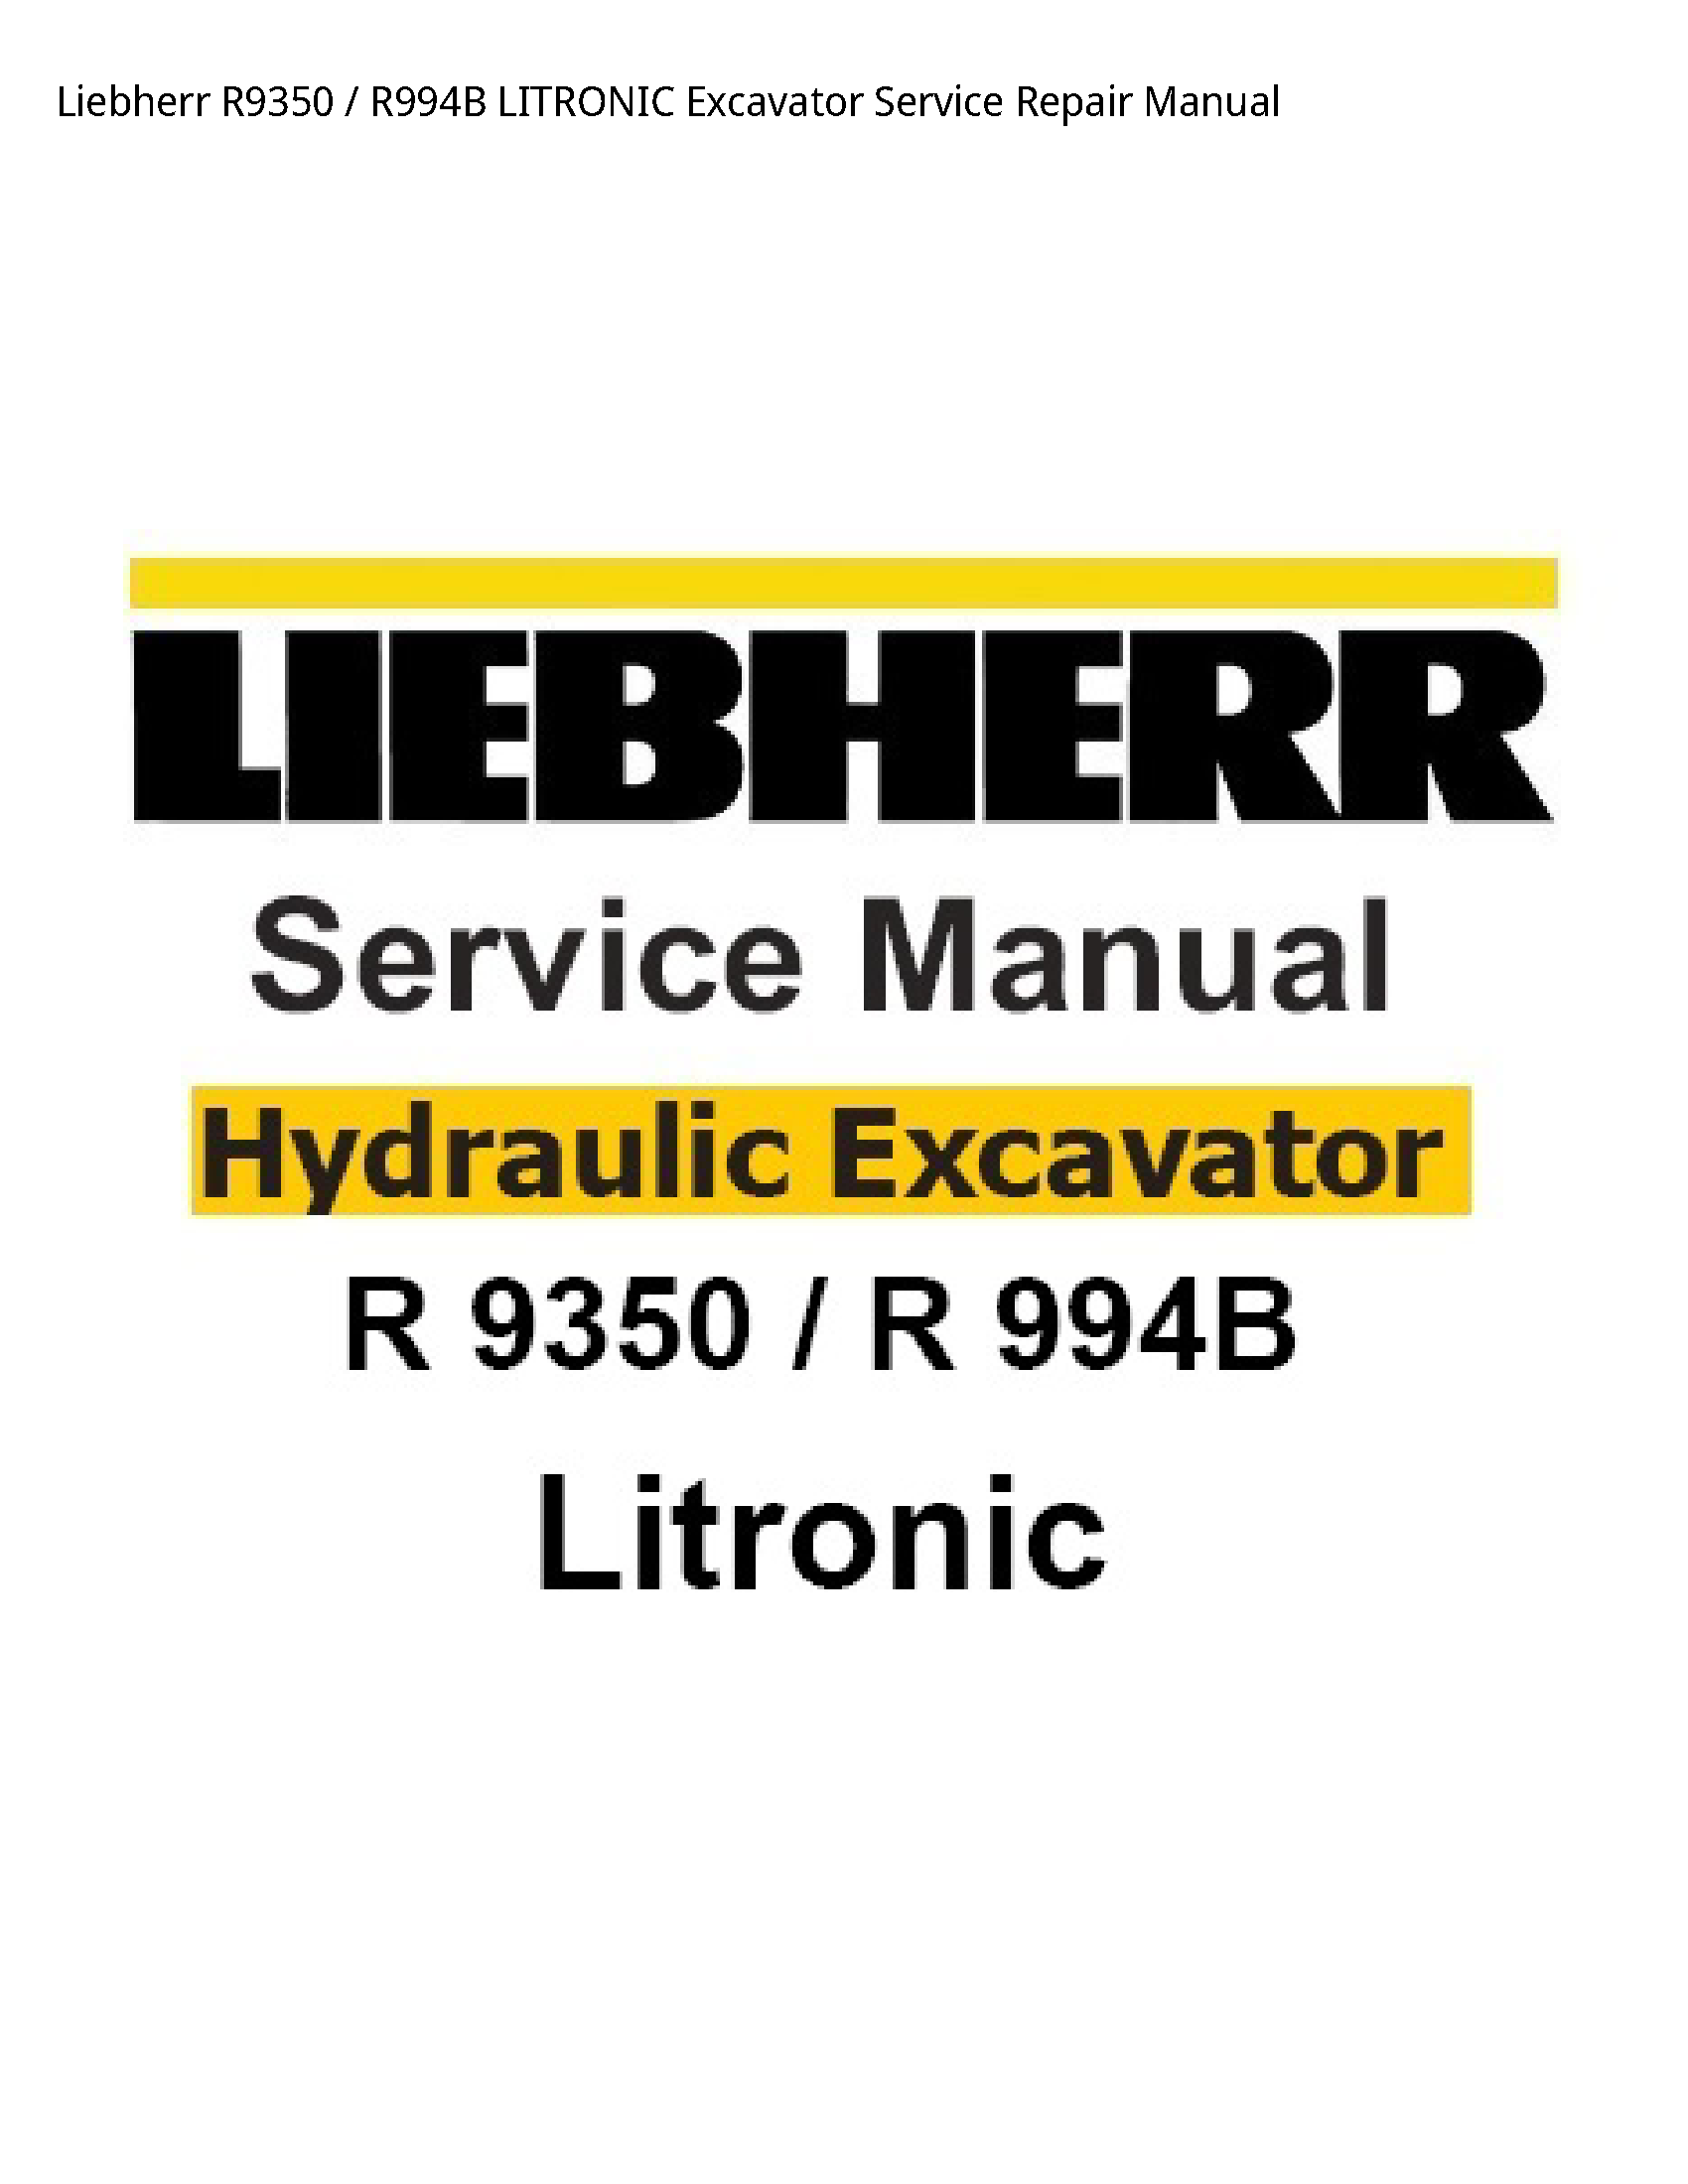 Liebherr R9350 LITRONIC Excavator manual